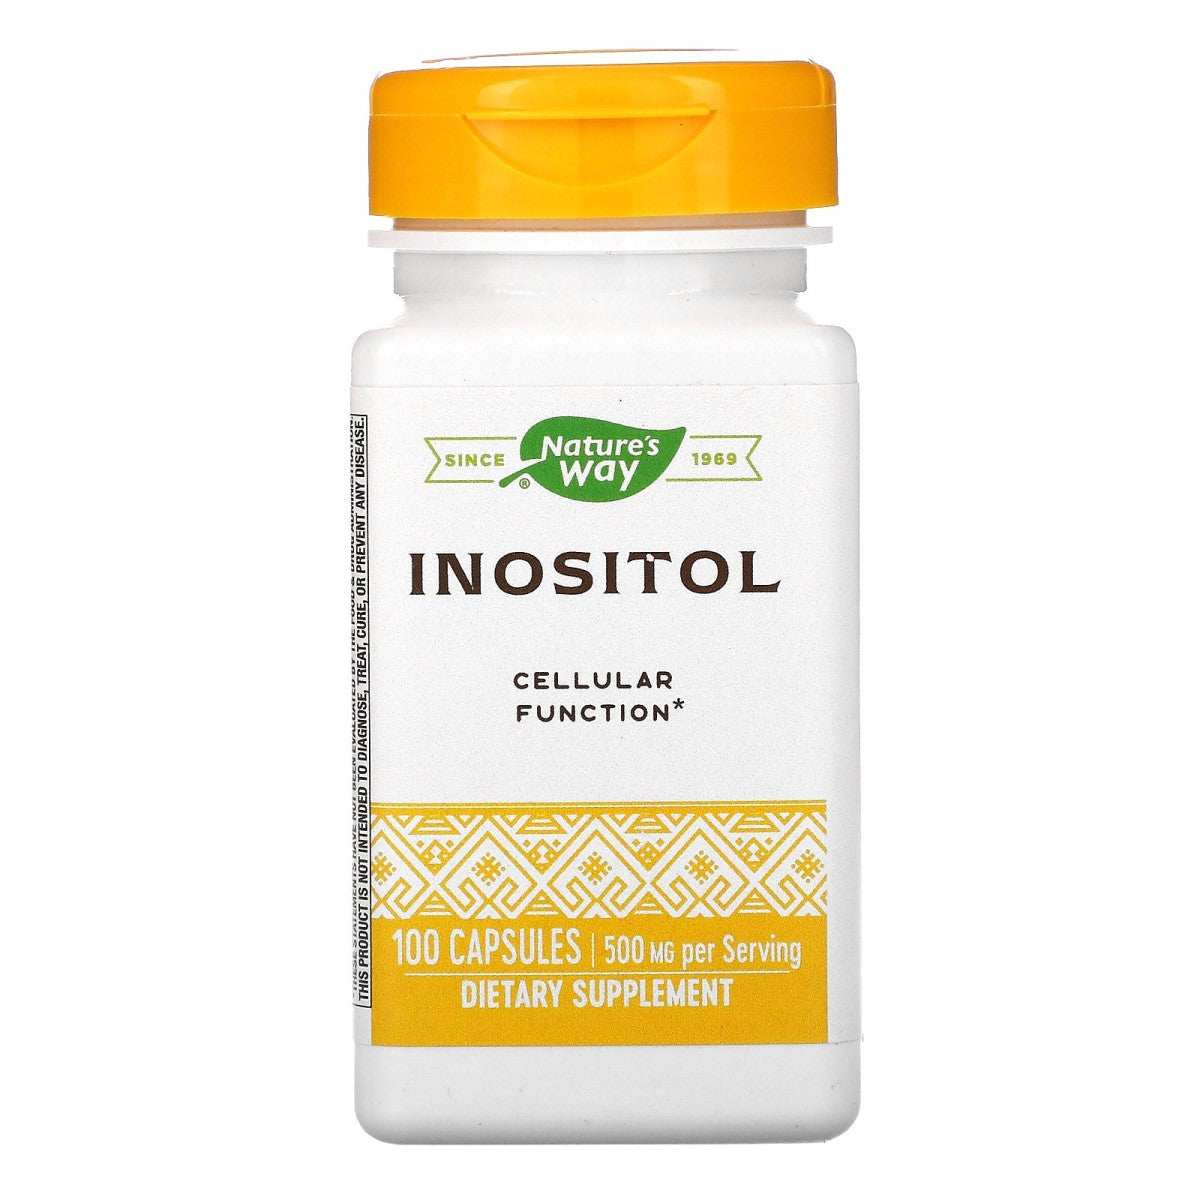 Primary image of Inositol